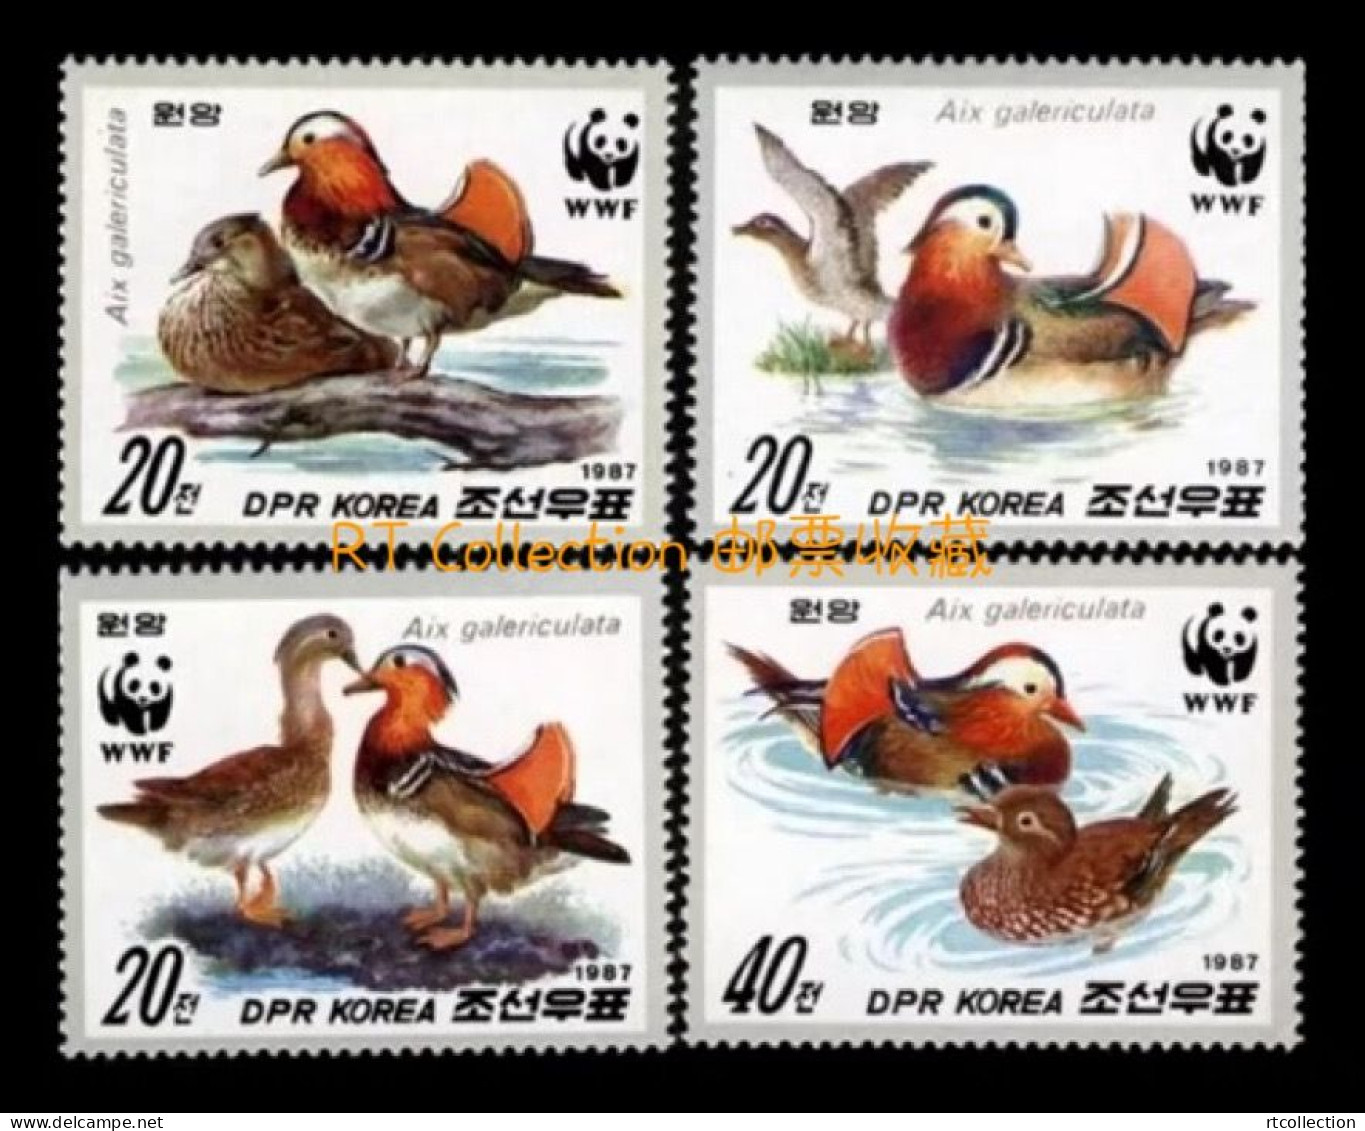 Korea 1987 World Nature Conservation Mandarin Ducks Duck WWF Fauna Animals Organizations W.W.F. Nature Stamps MNH - Patos